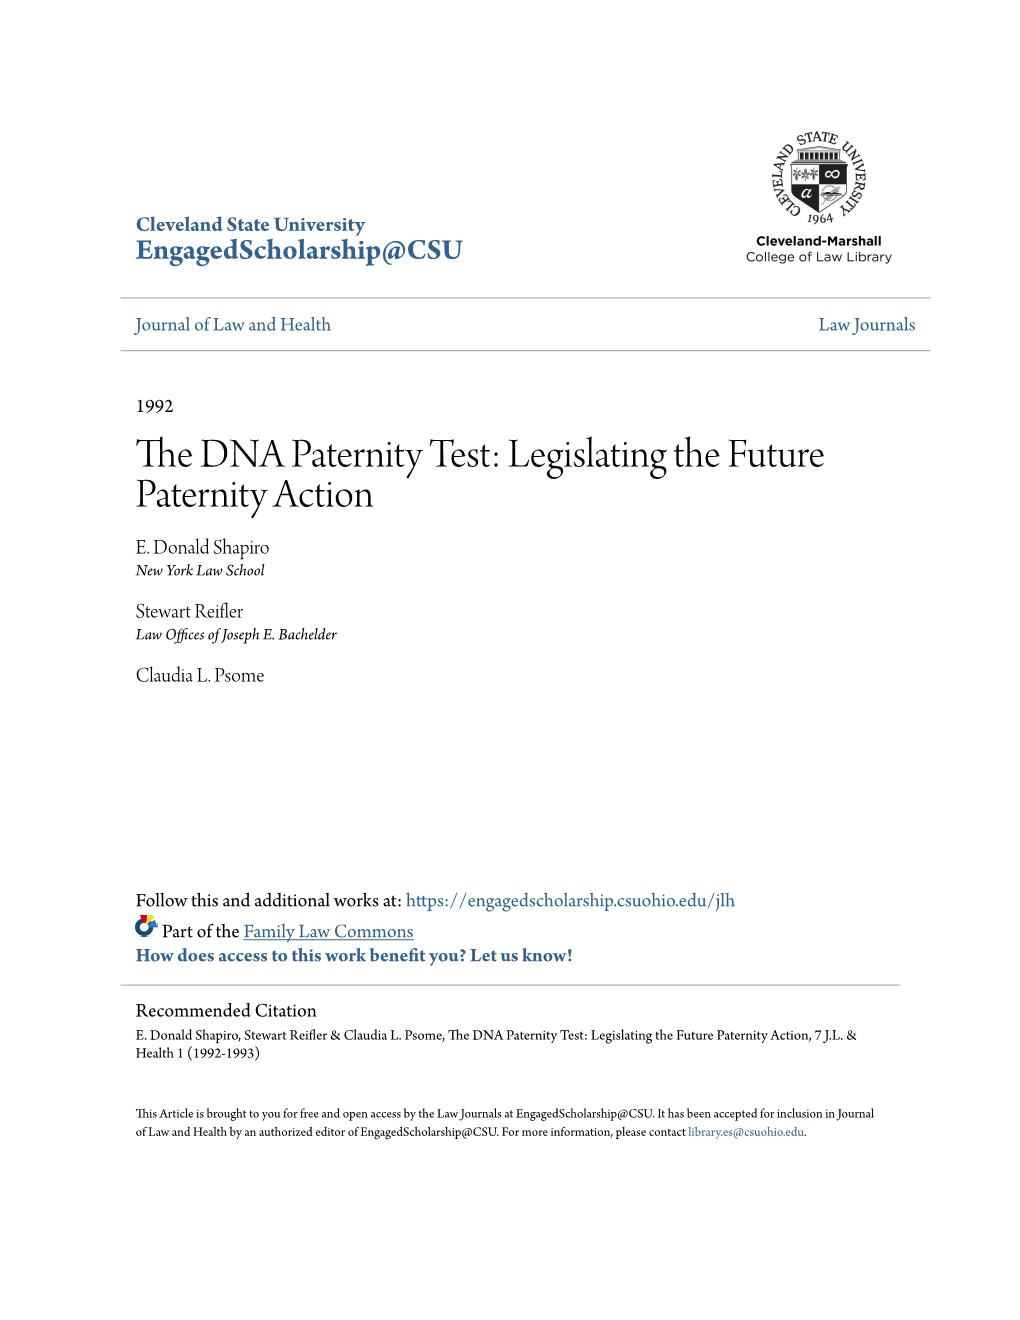 The DNA Paternity Test: Legislating the Future Paternity Action E